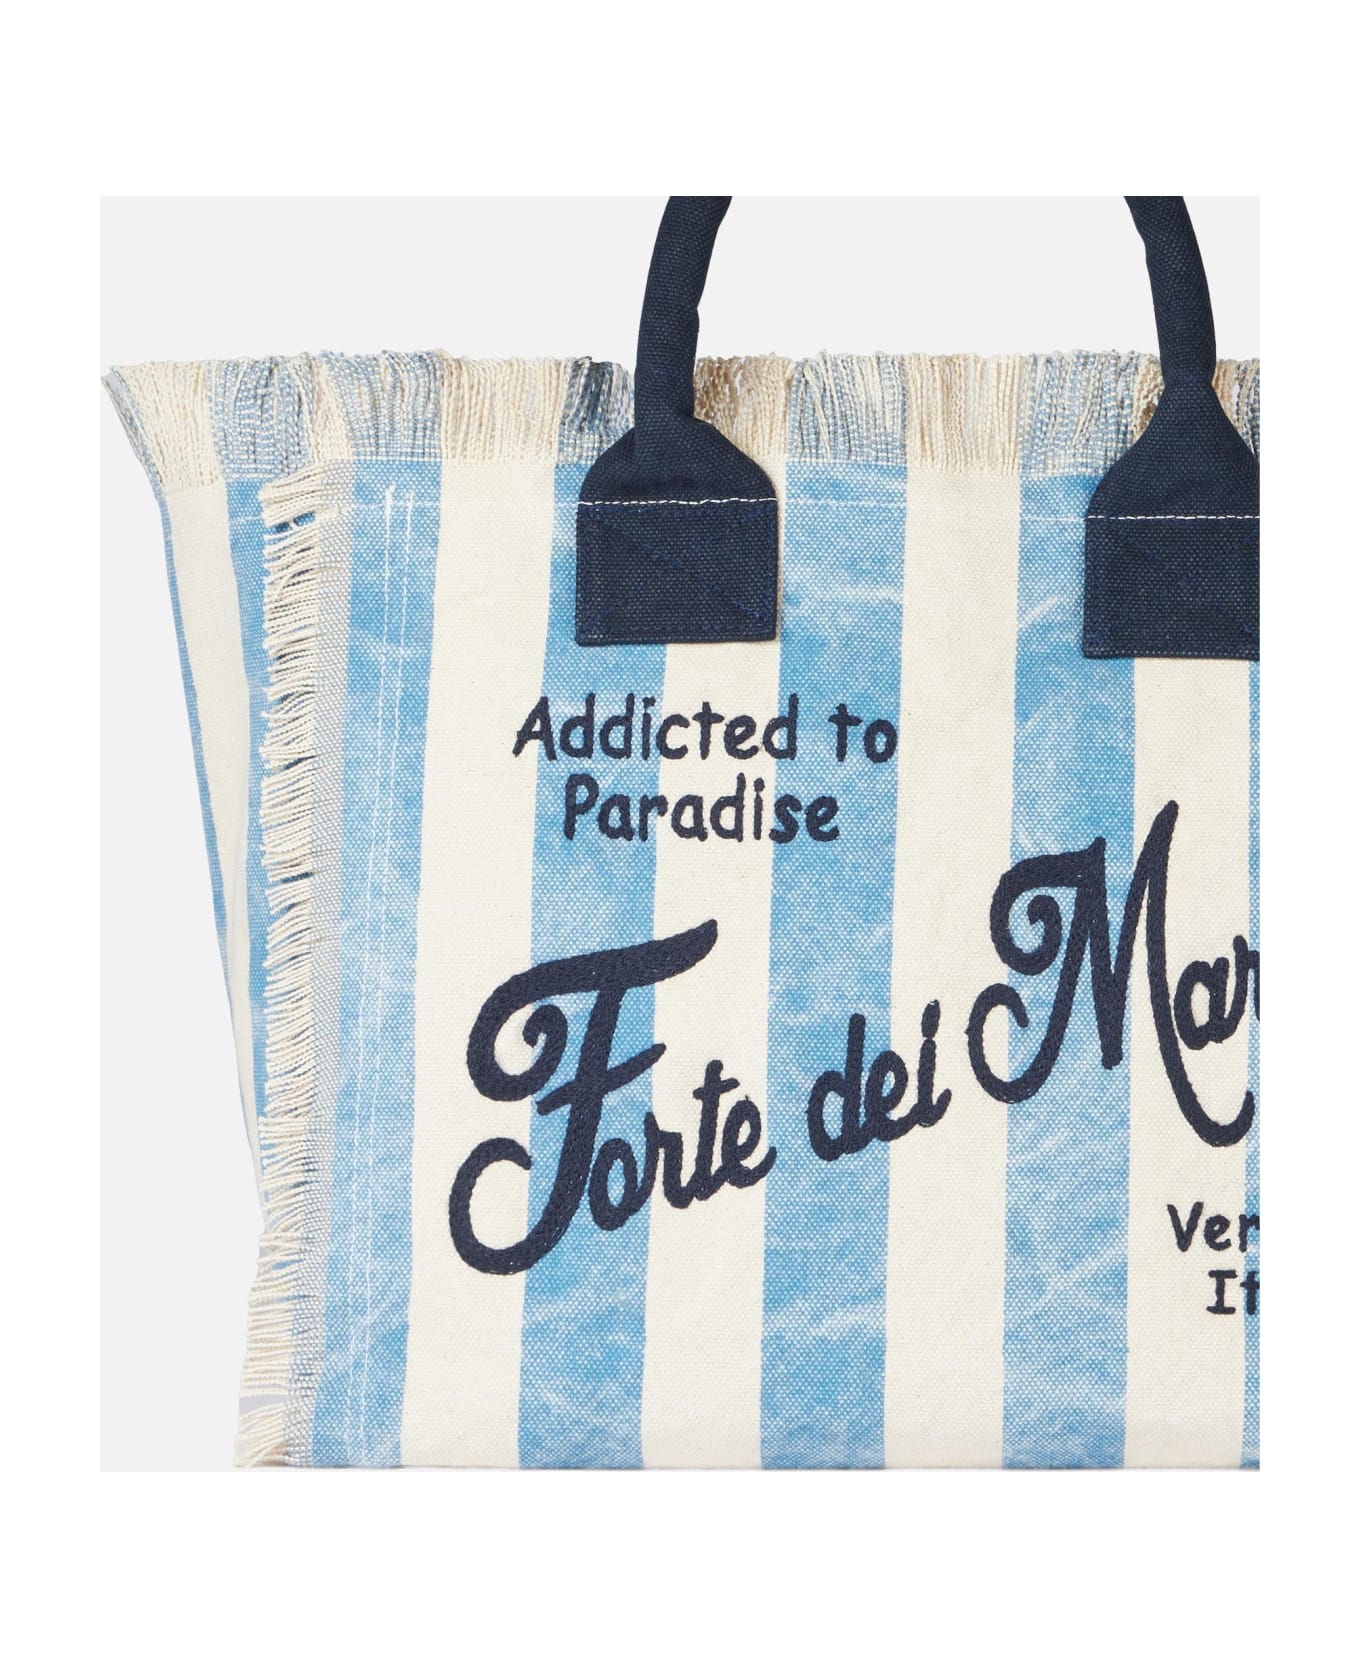 MC2 Saint Barth Vanity Canvas Shoulder Bag With Forte Dei Marmi Print - BLUE トートバッグ